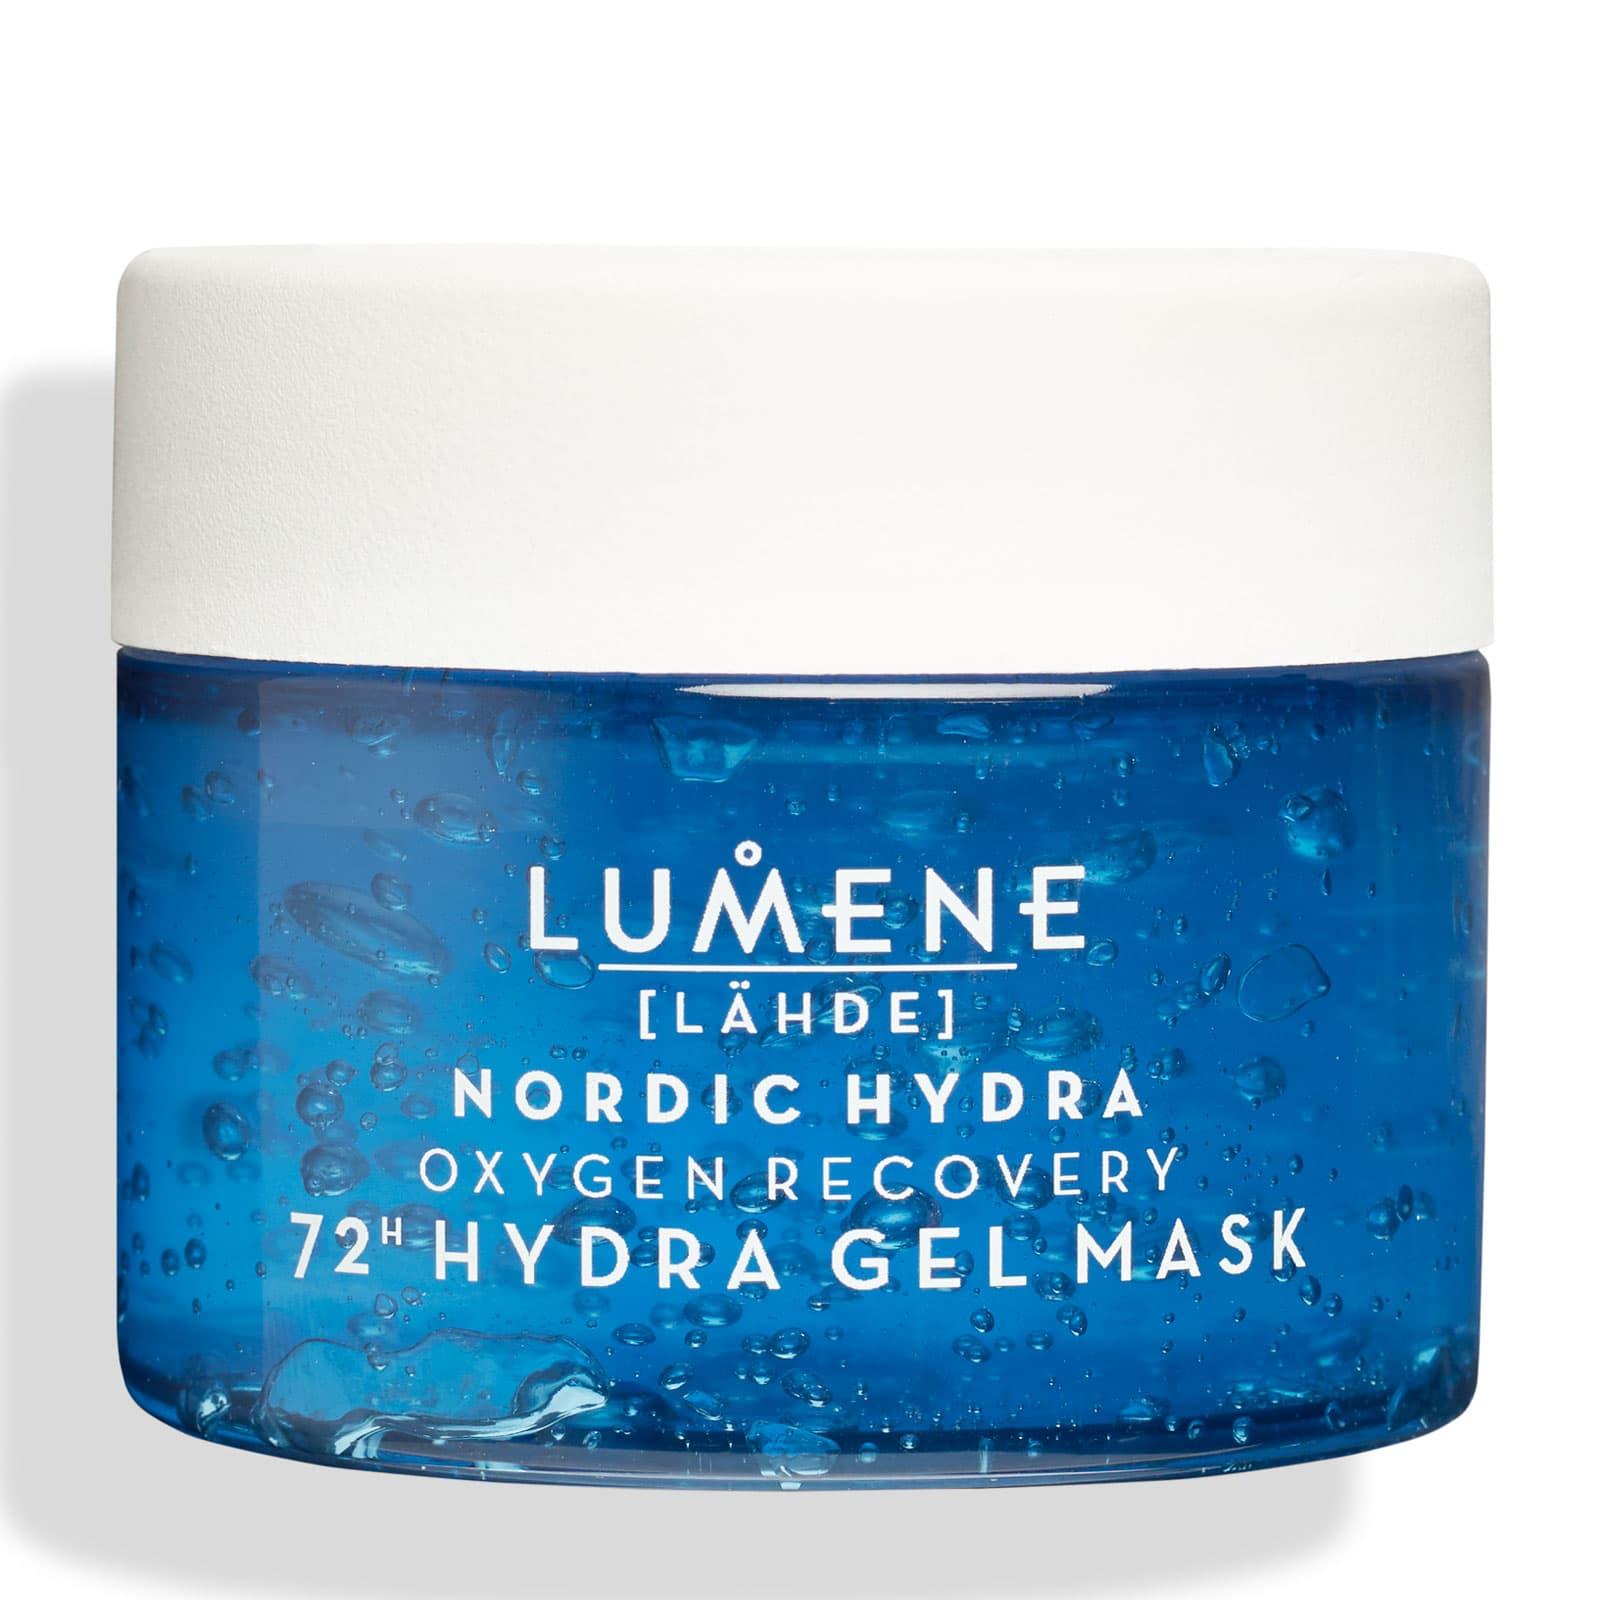 Nordic Hydra [LAHDE] Oxygen Recovery 72h Hydra Gel Mask